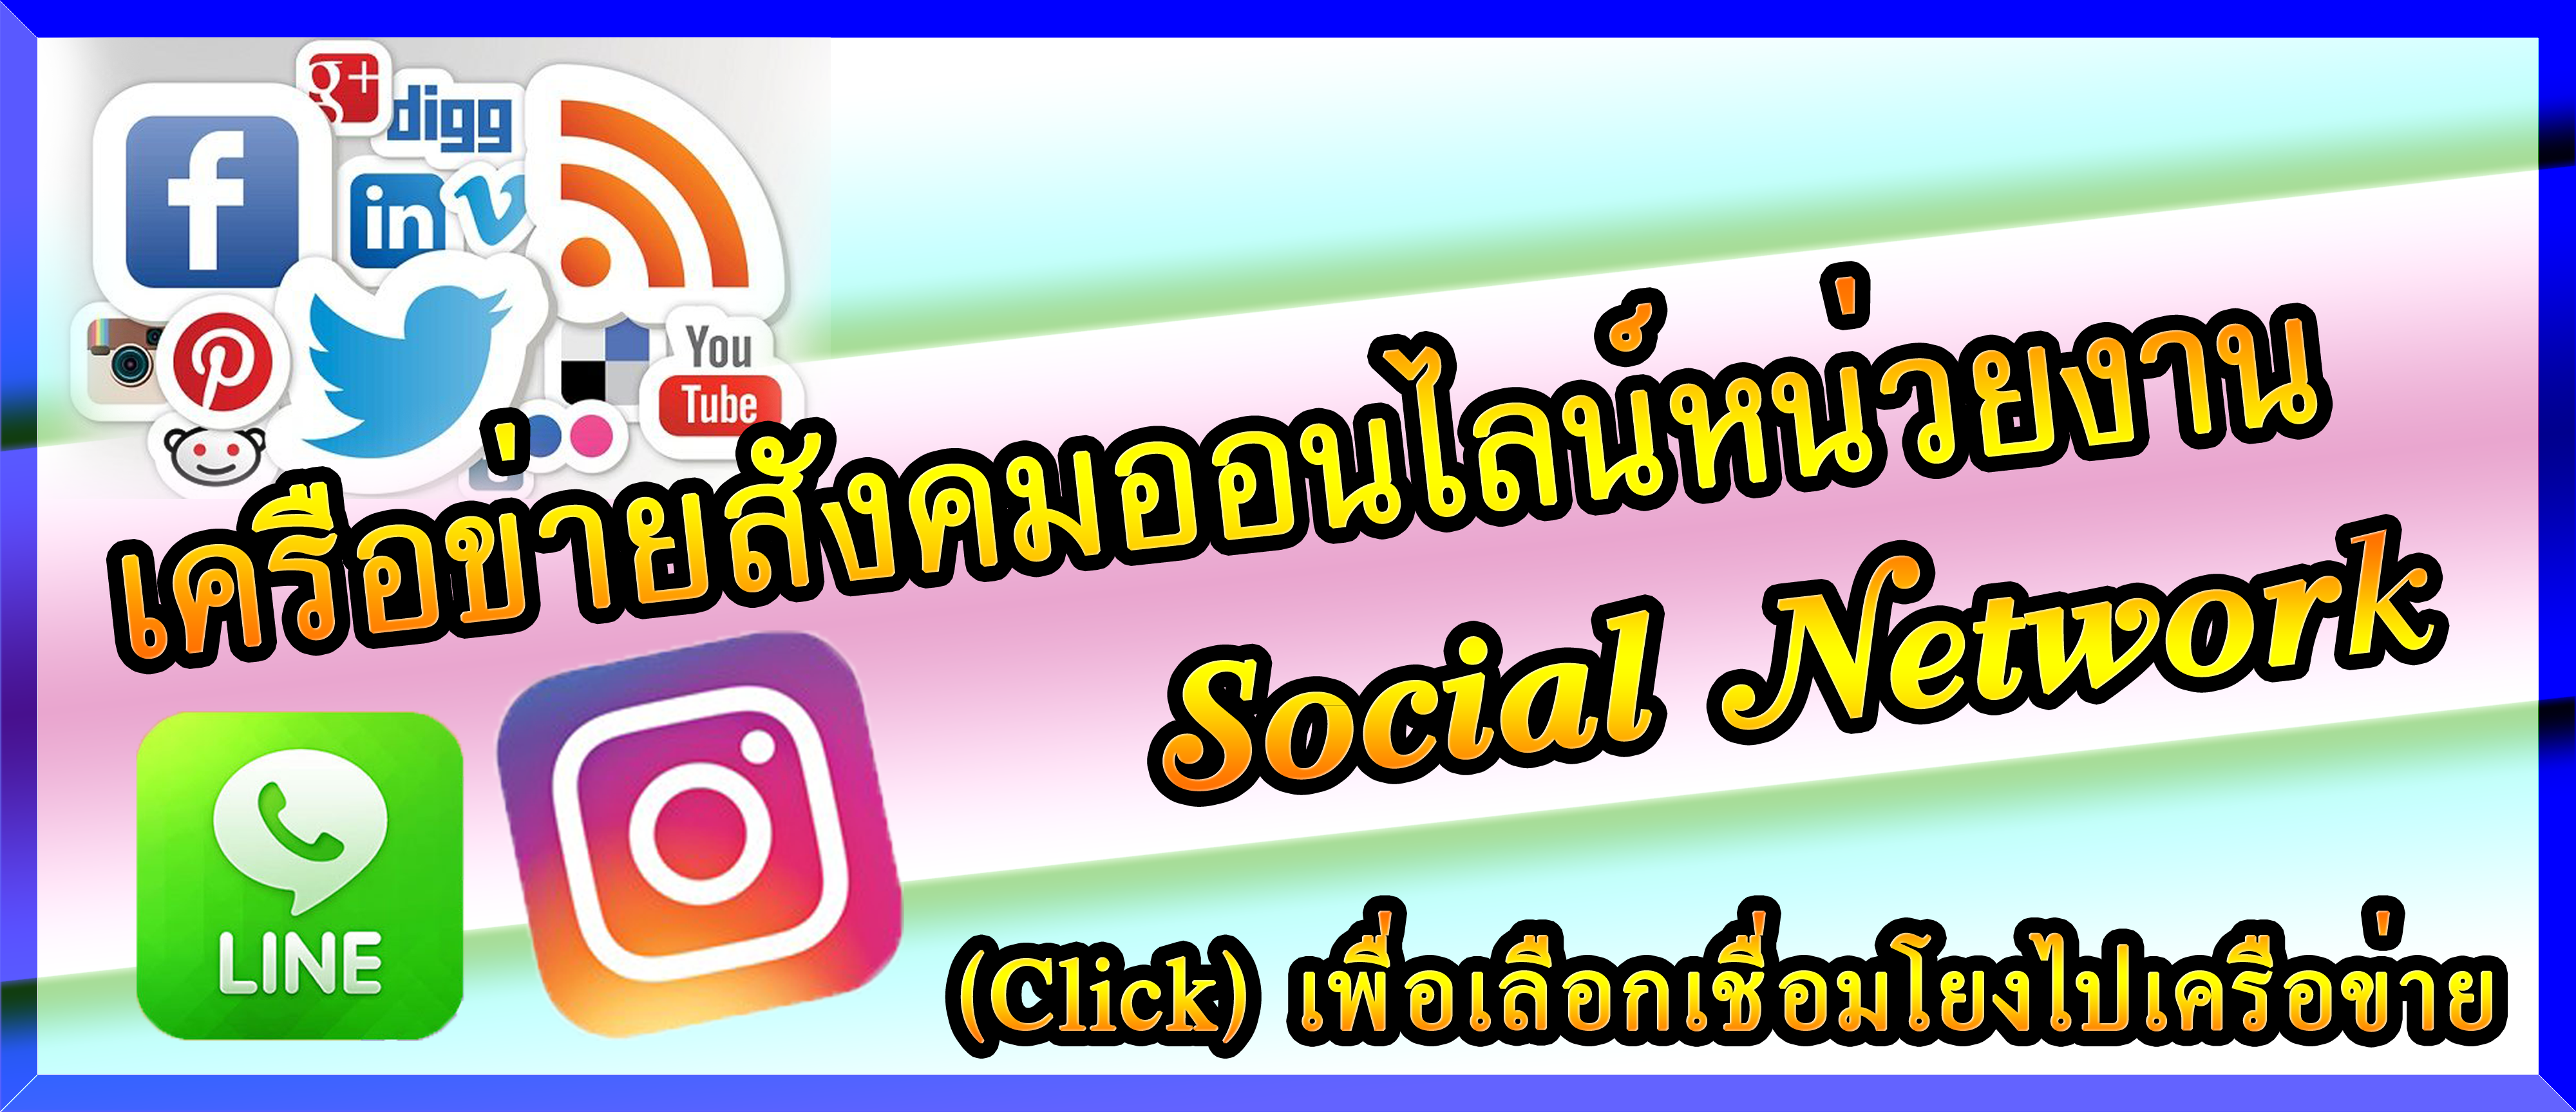 Social Network agency